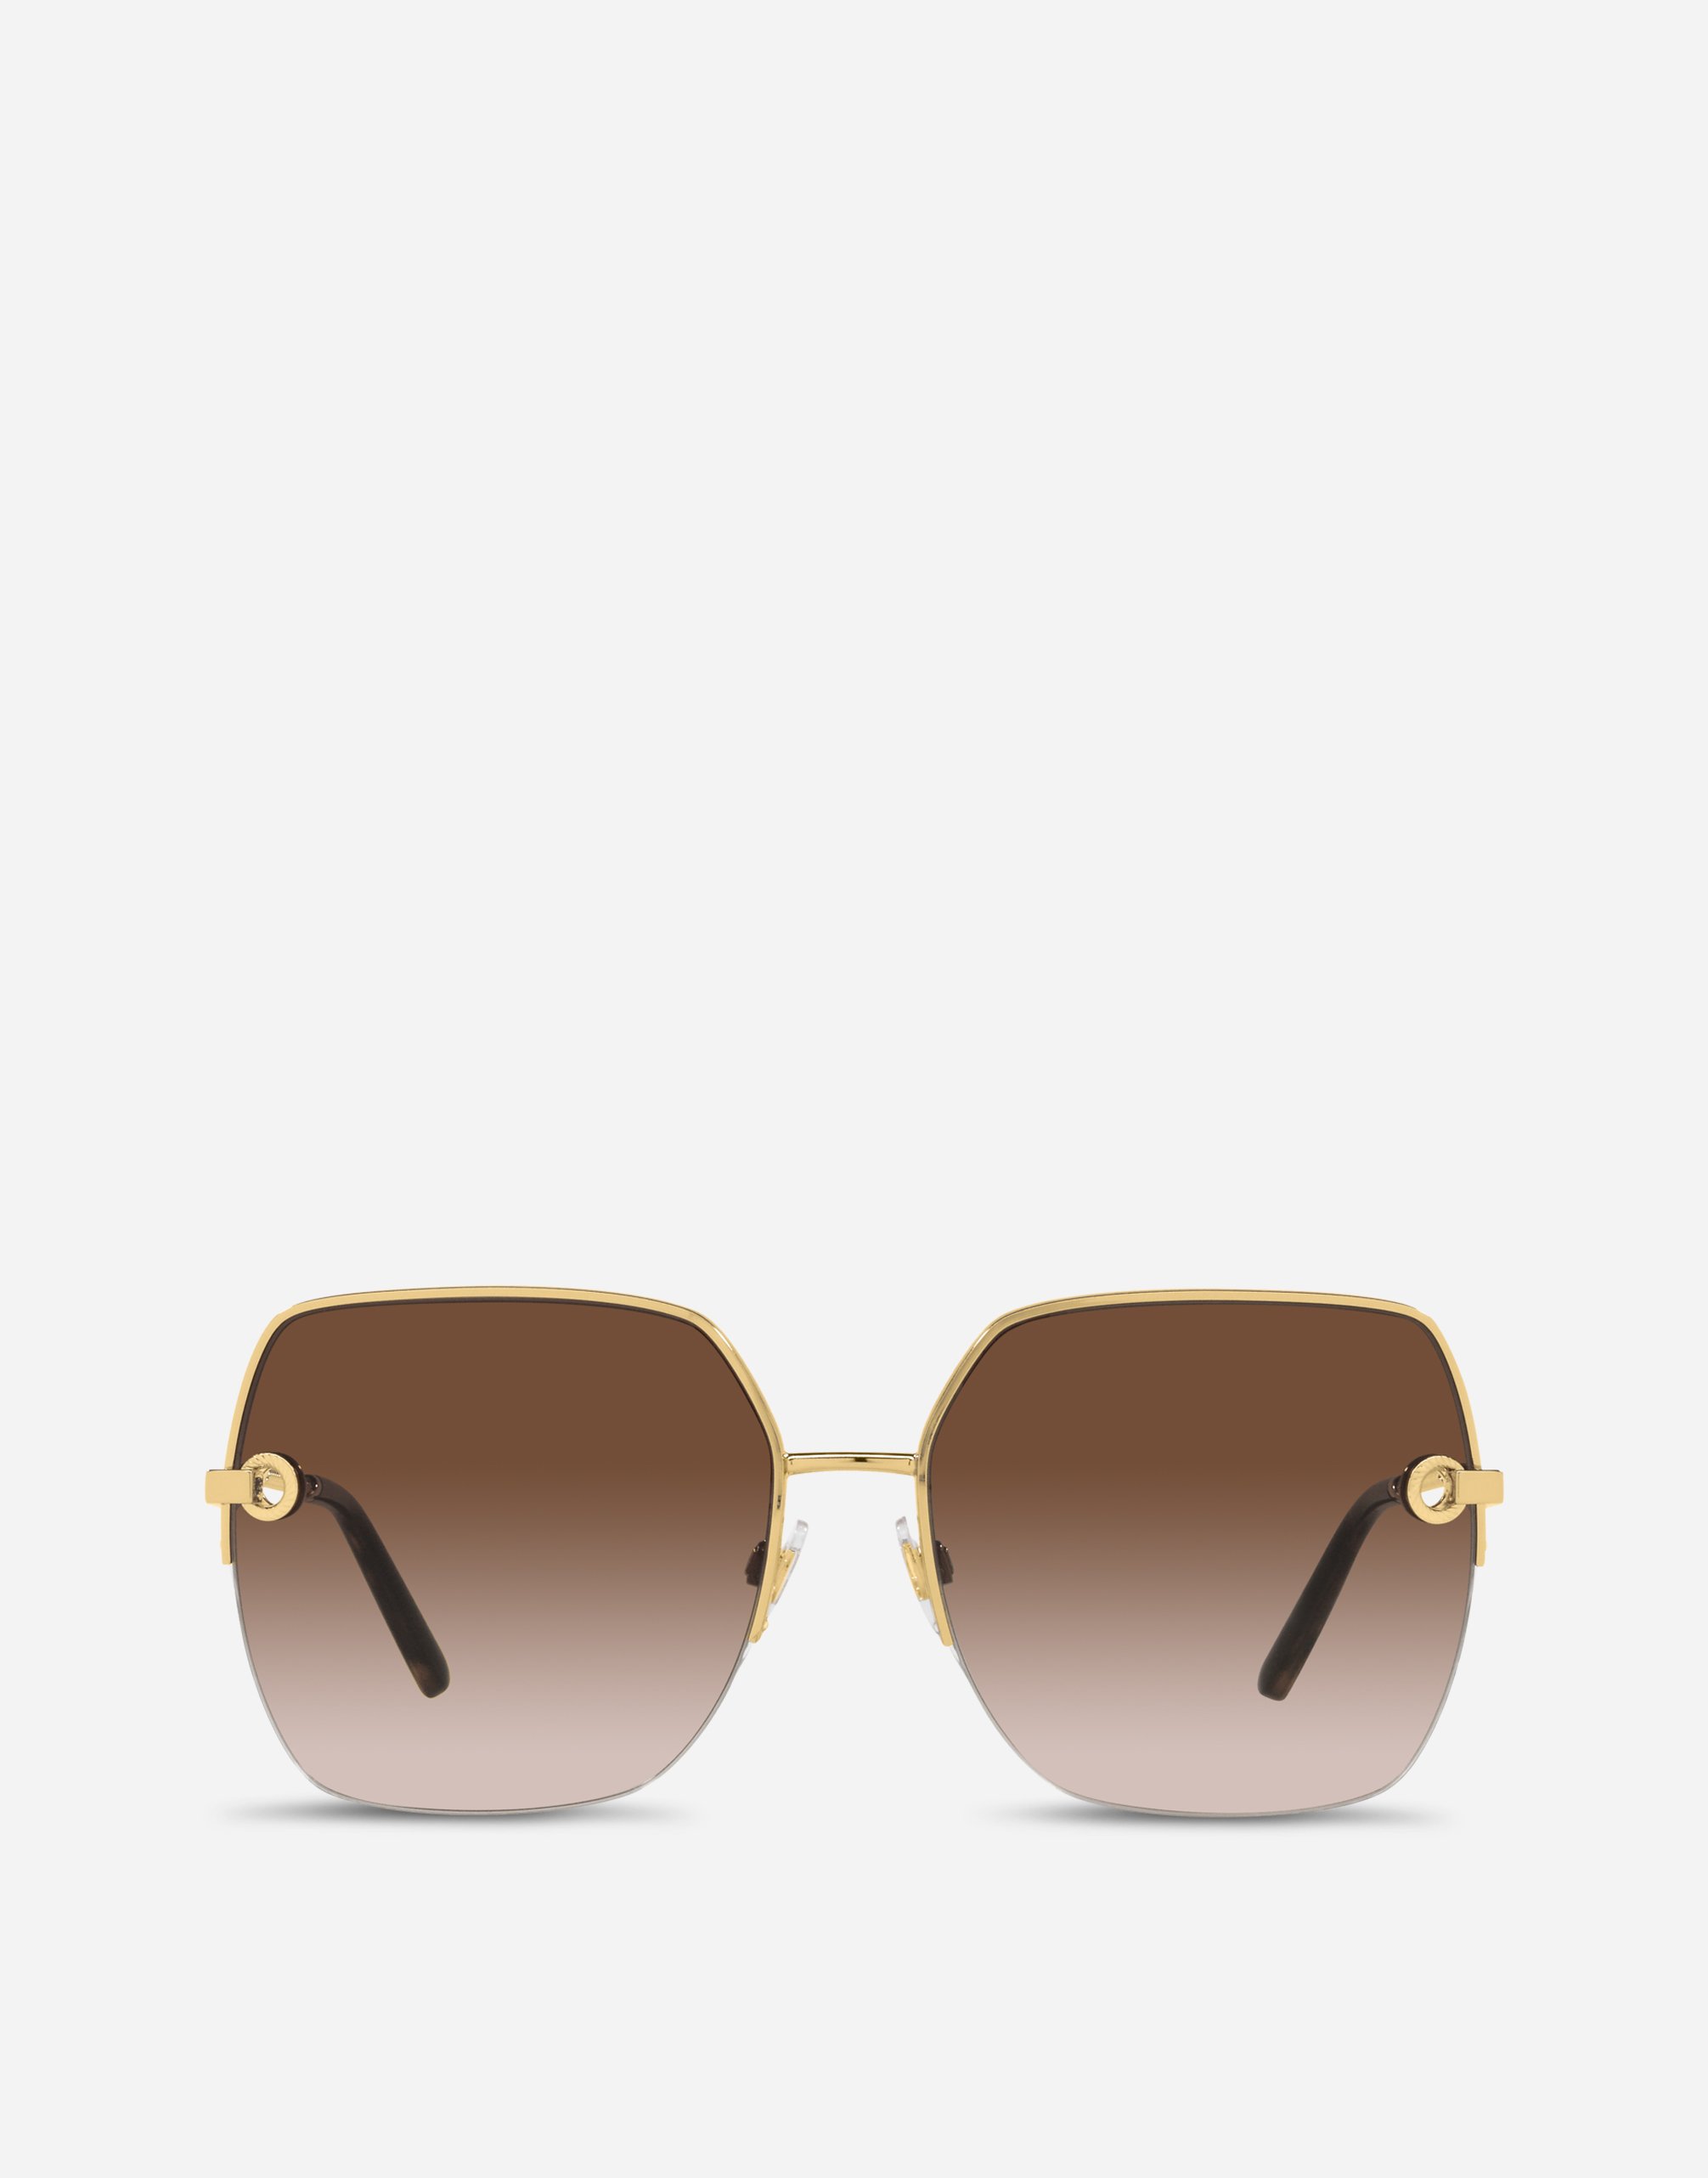 DG Amore sunglasses in Gold